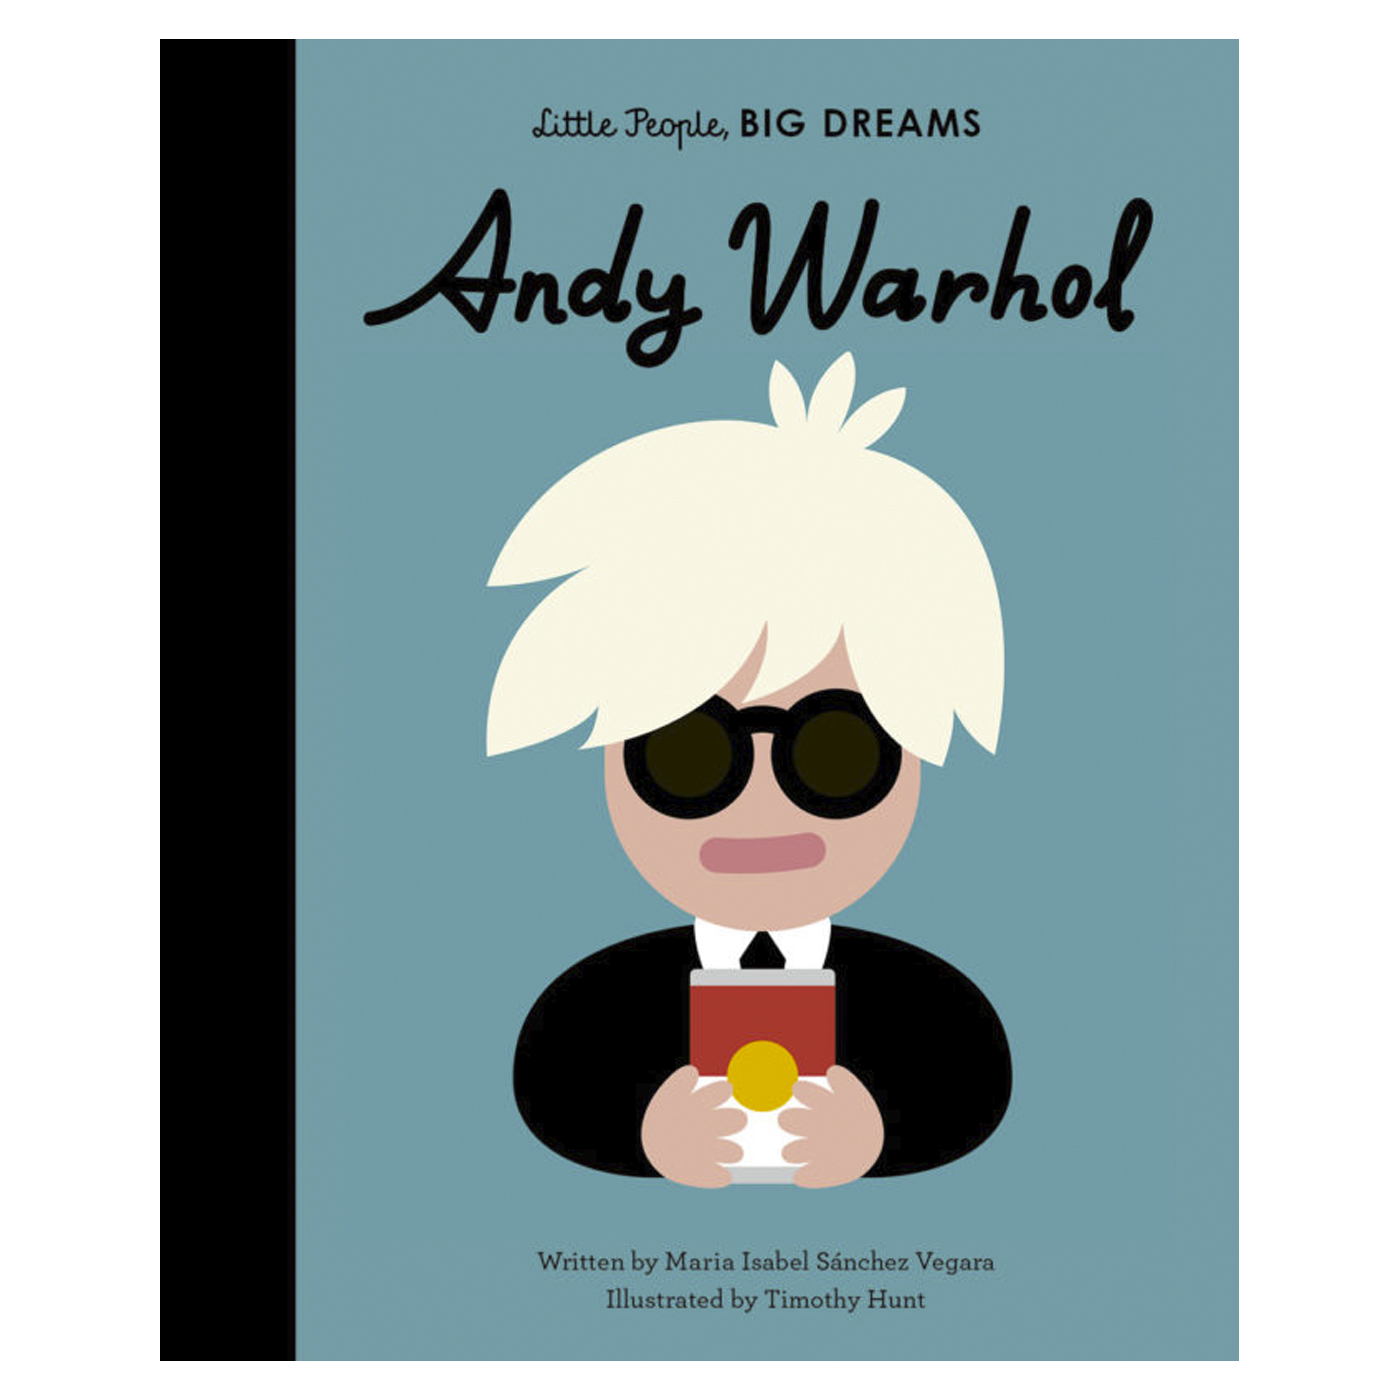  Little People Big Dreams: Andy Warhol